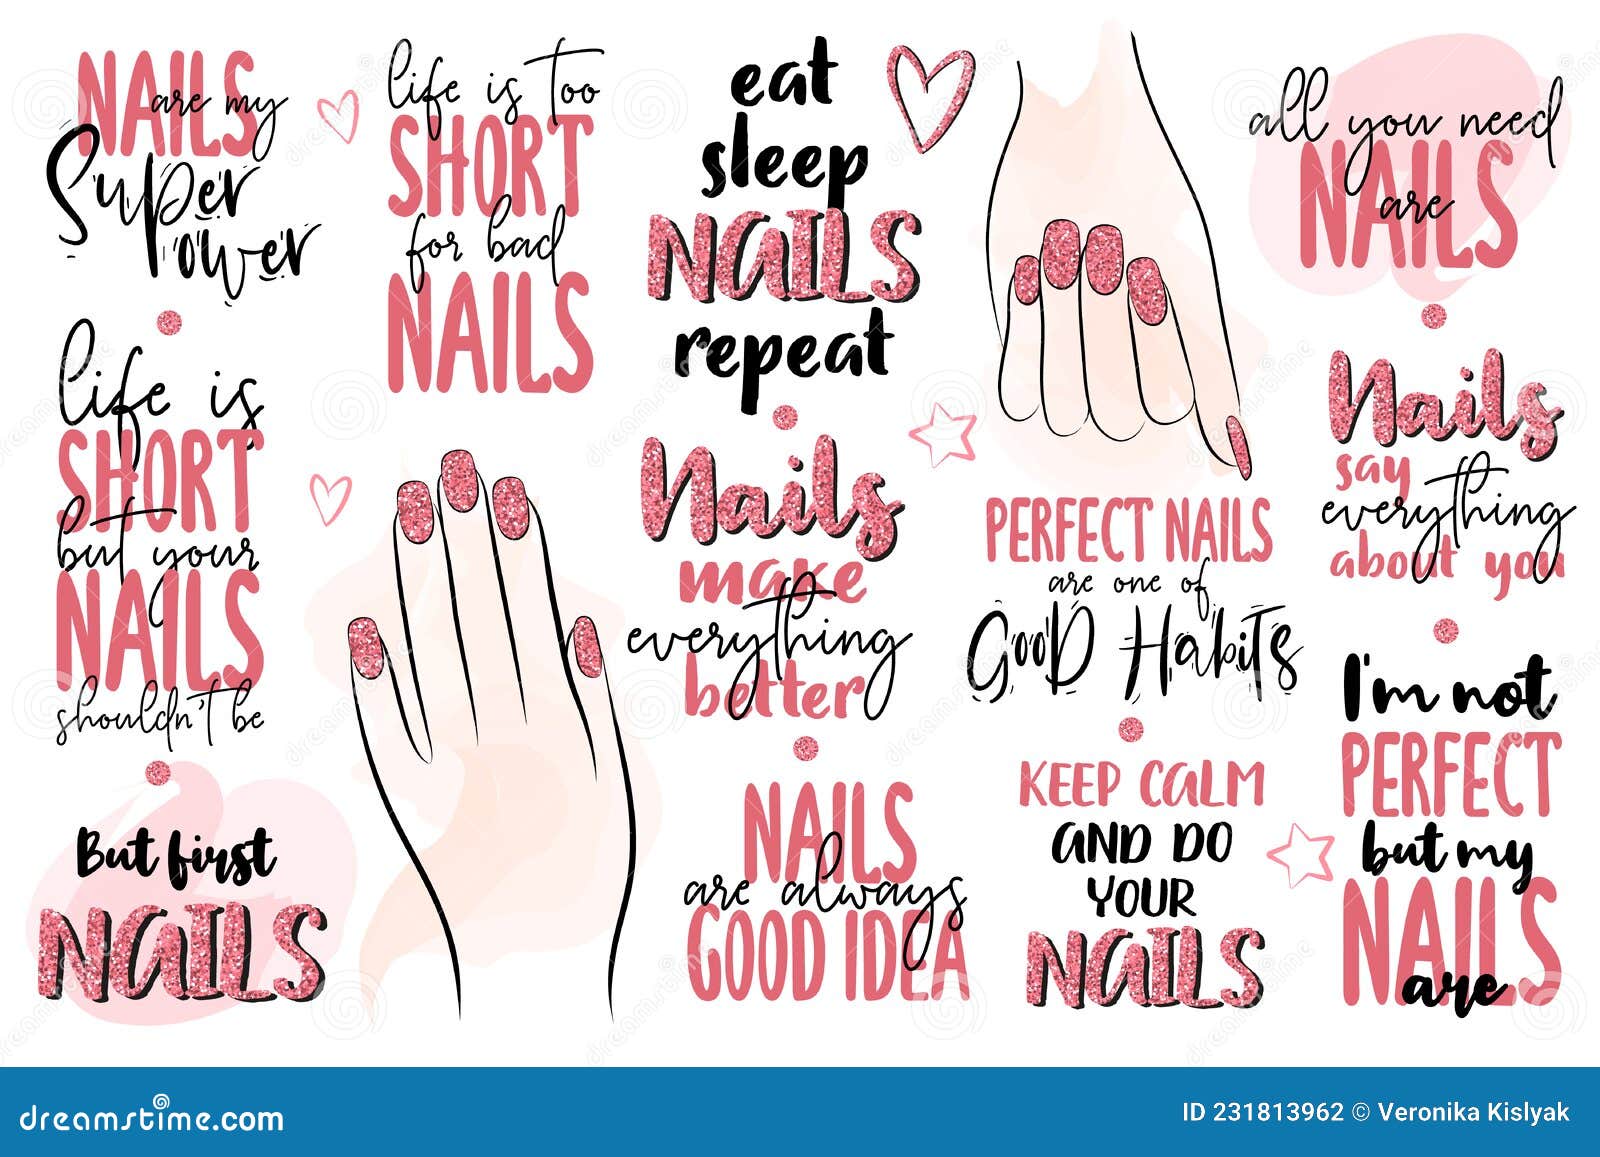 Love The Nails | Nail quotes funny, Nail tech quotes, Nail technician quotes